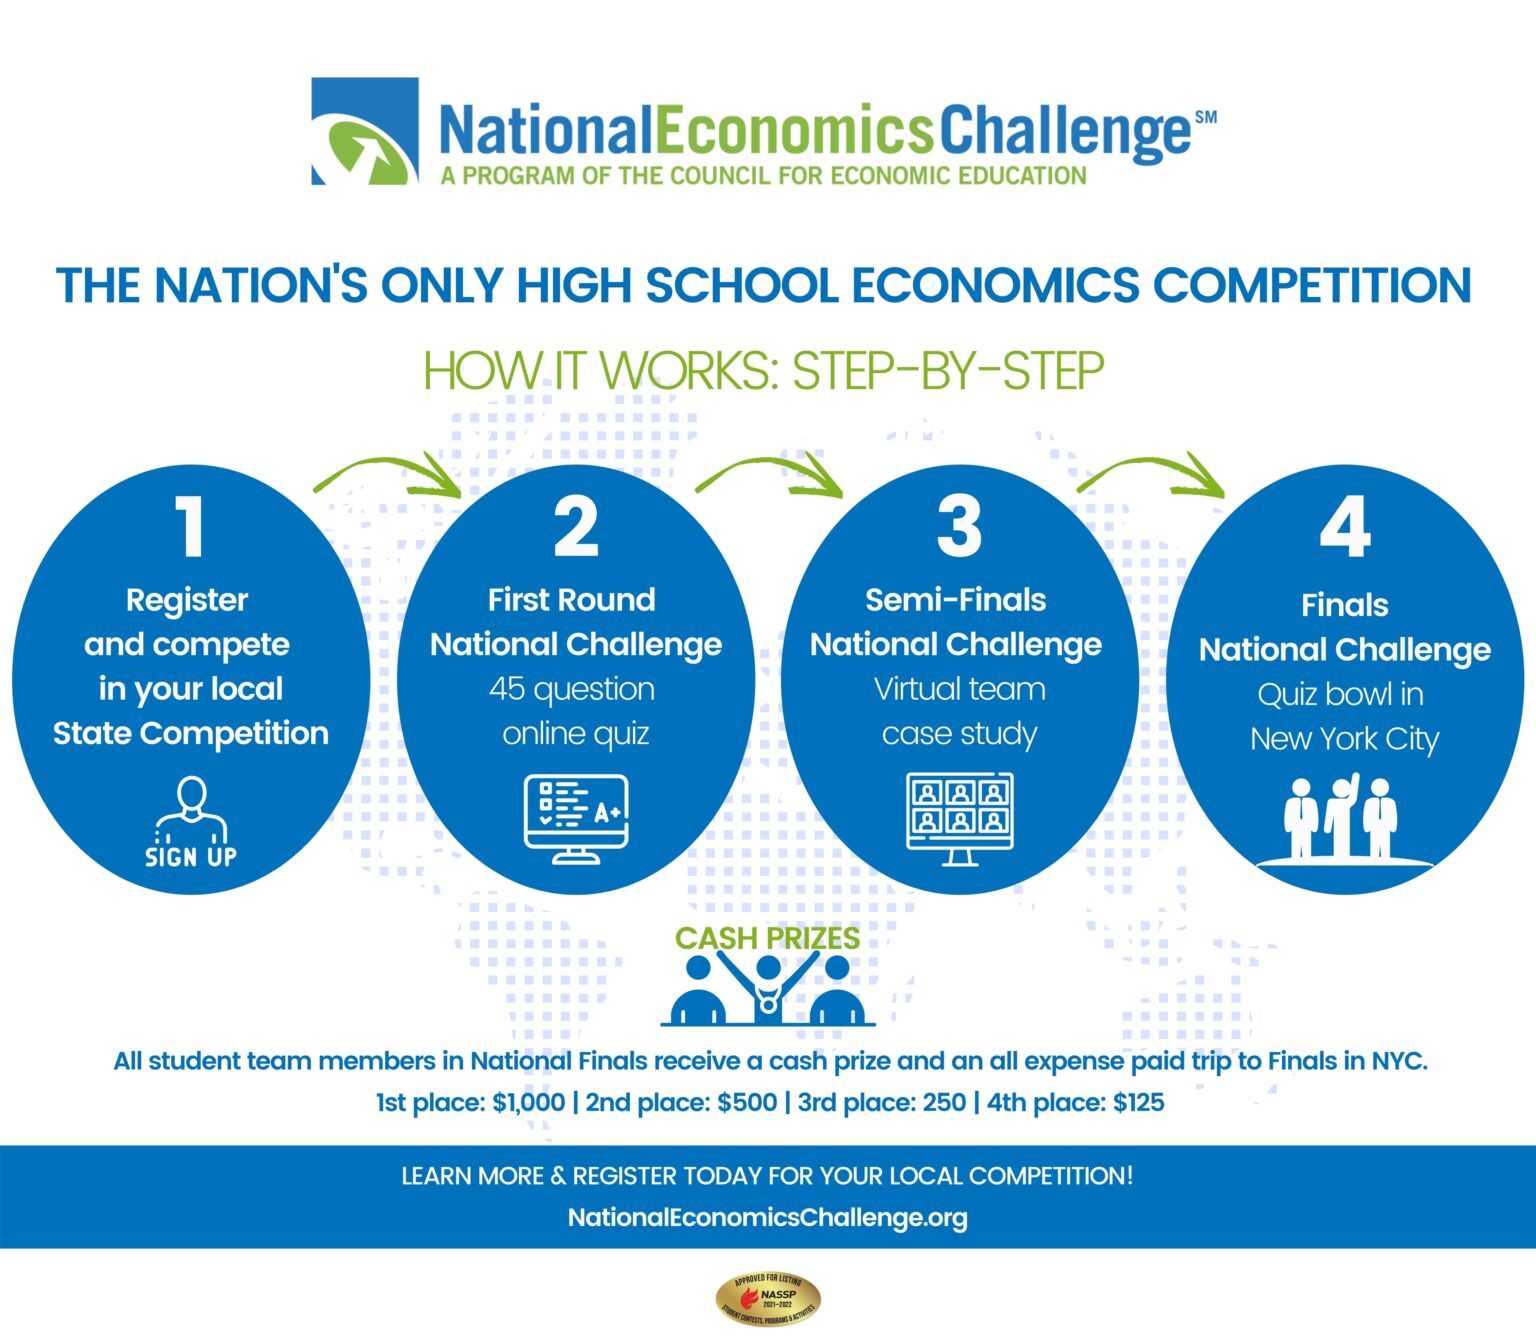 National Economics Challenge by the Council for Economic Education